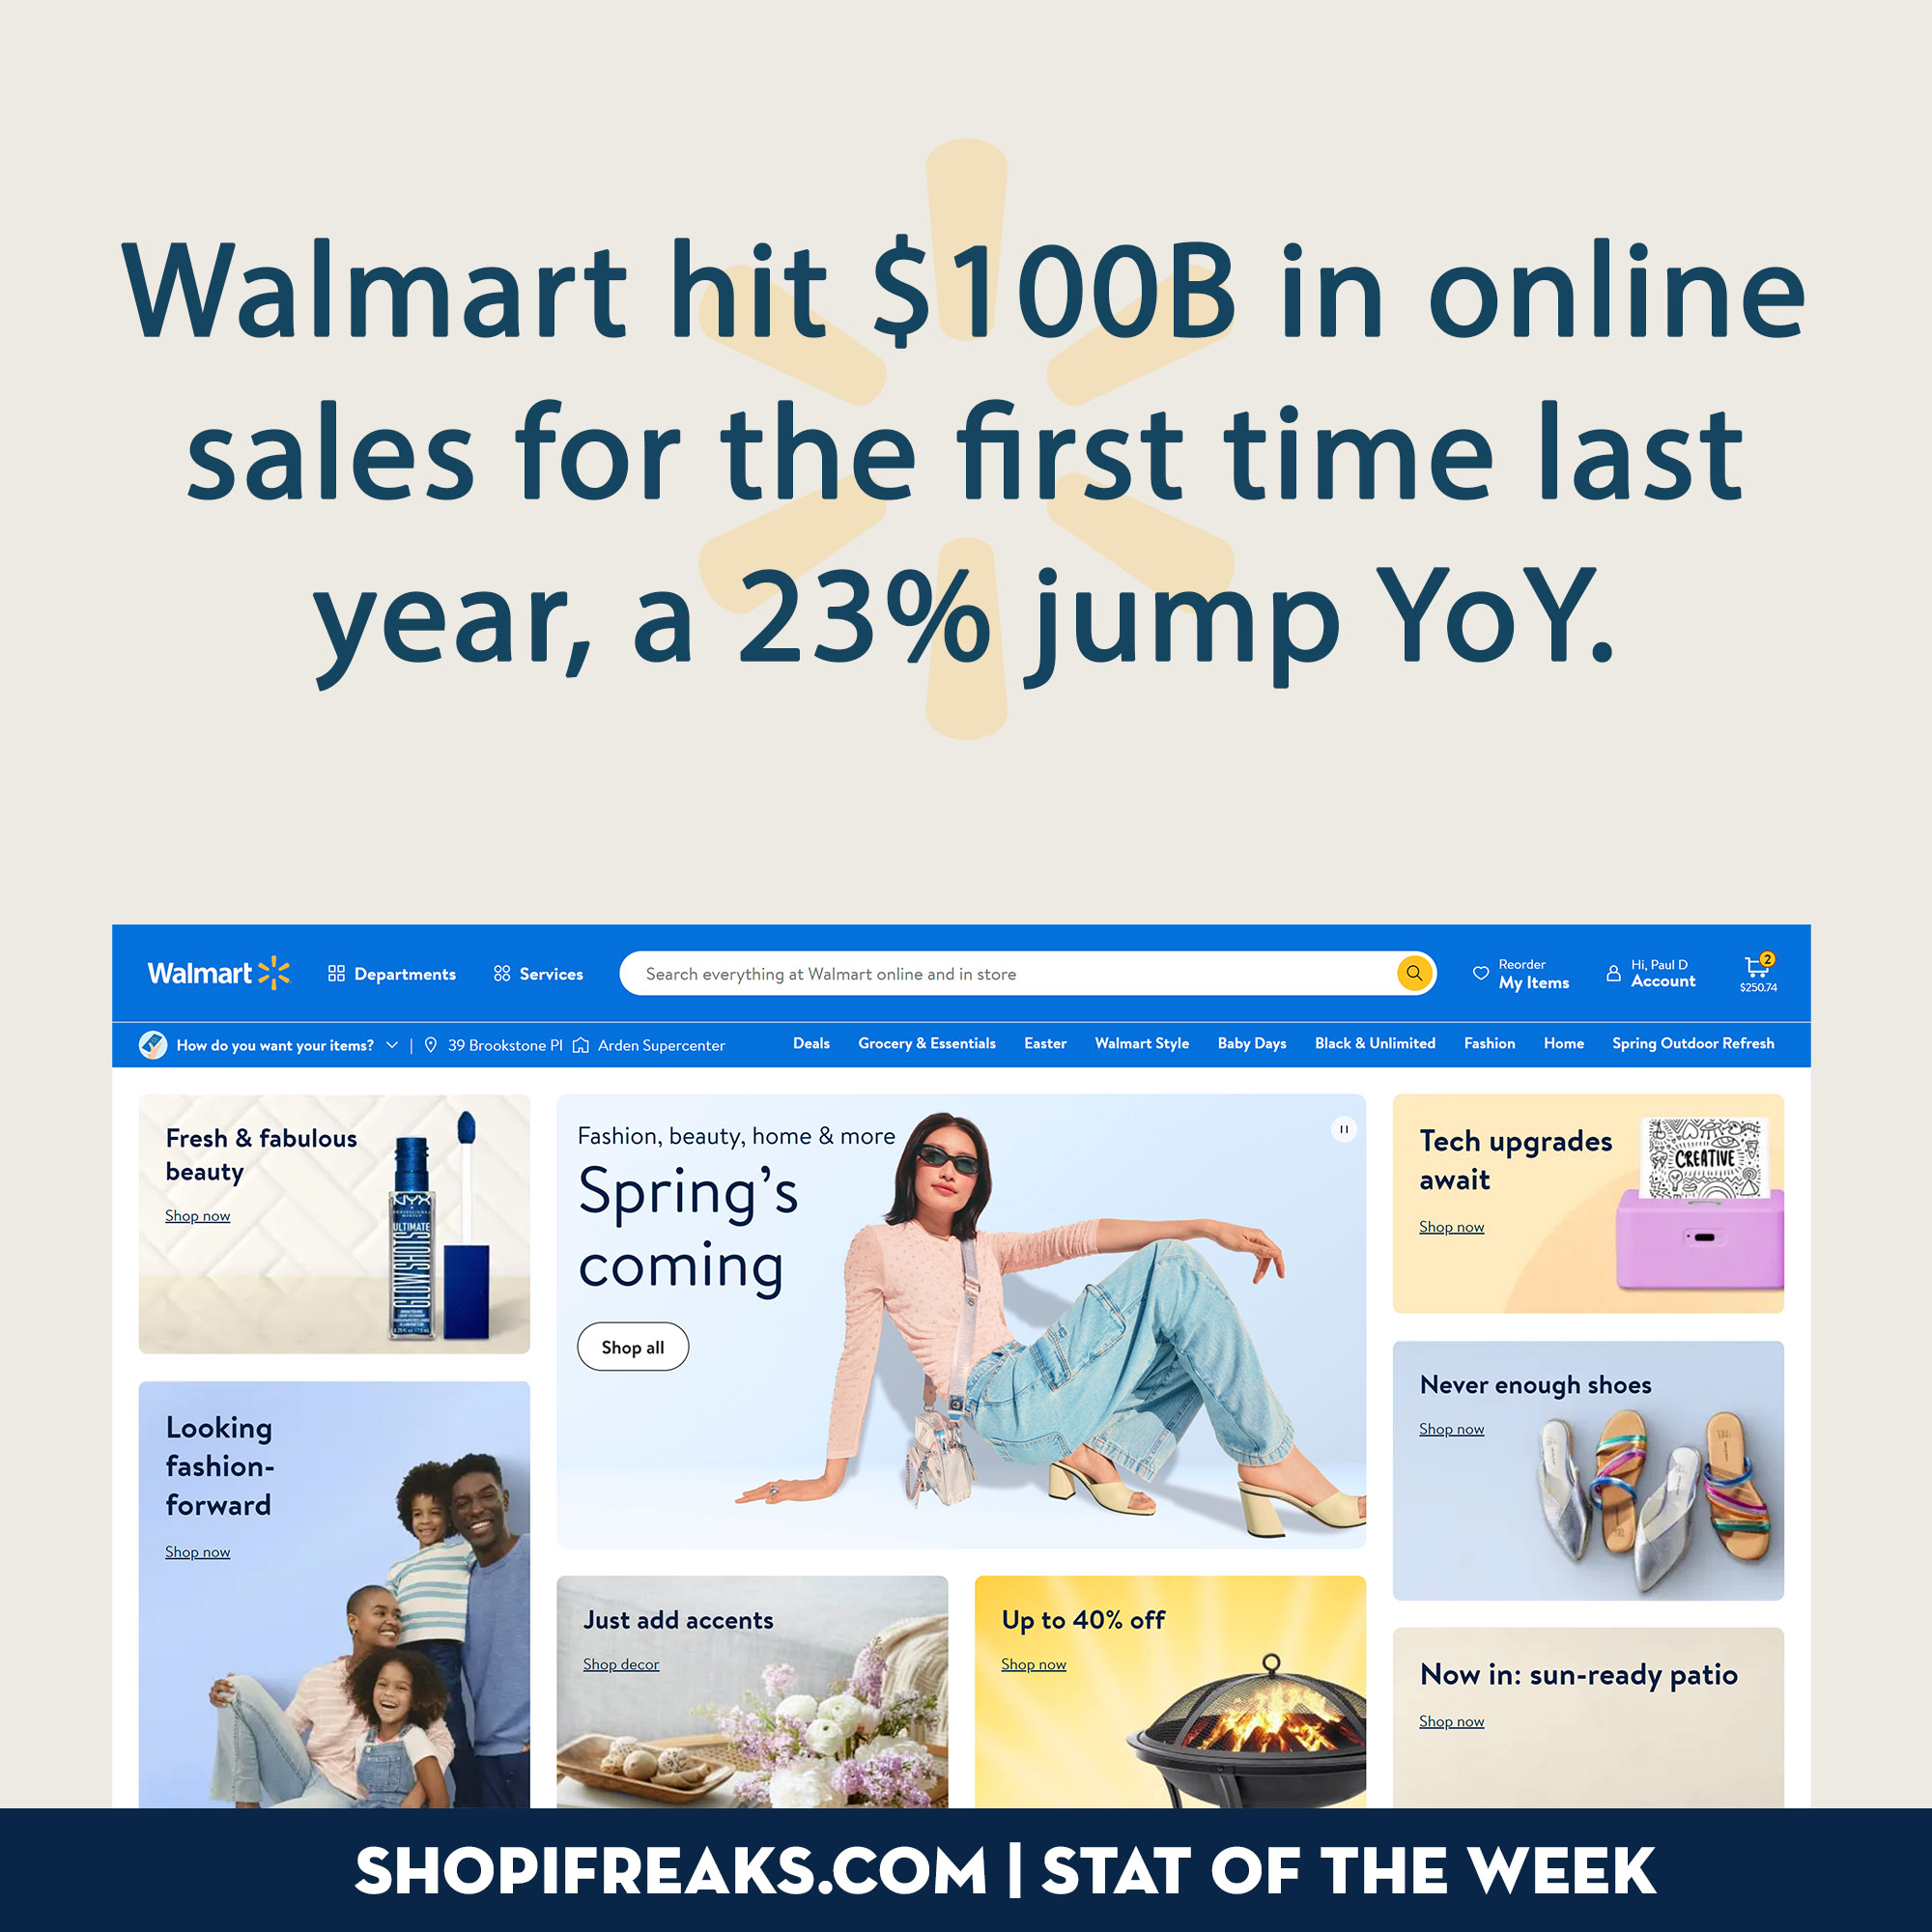 Walmart hit $100B in online sales